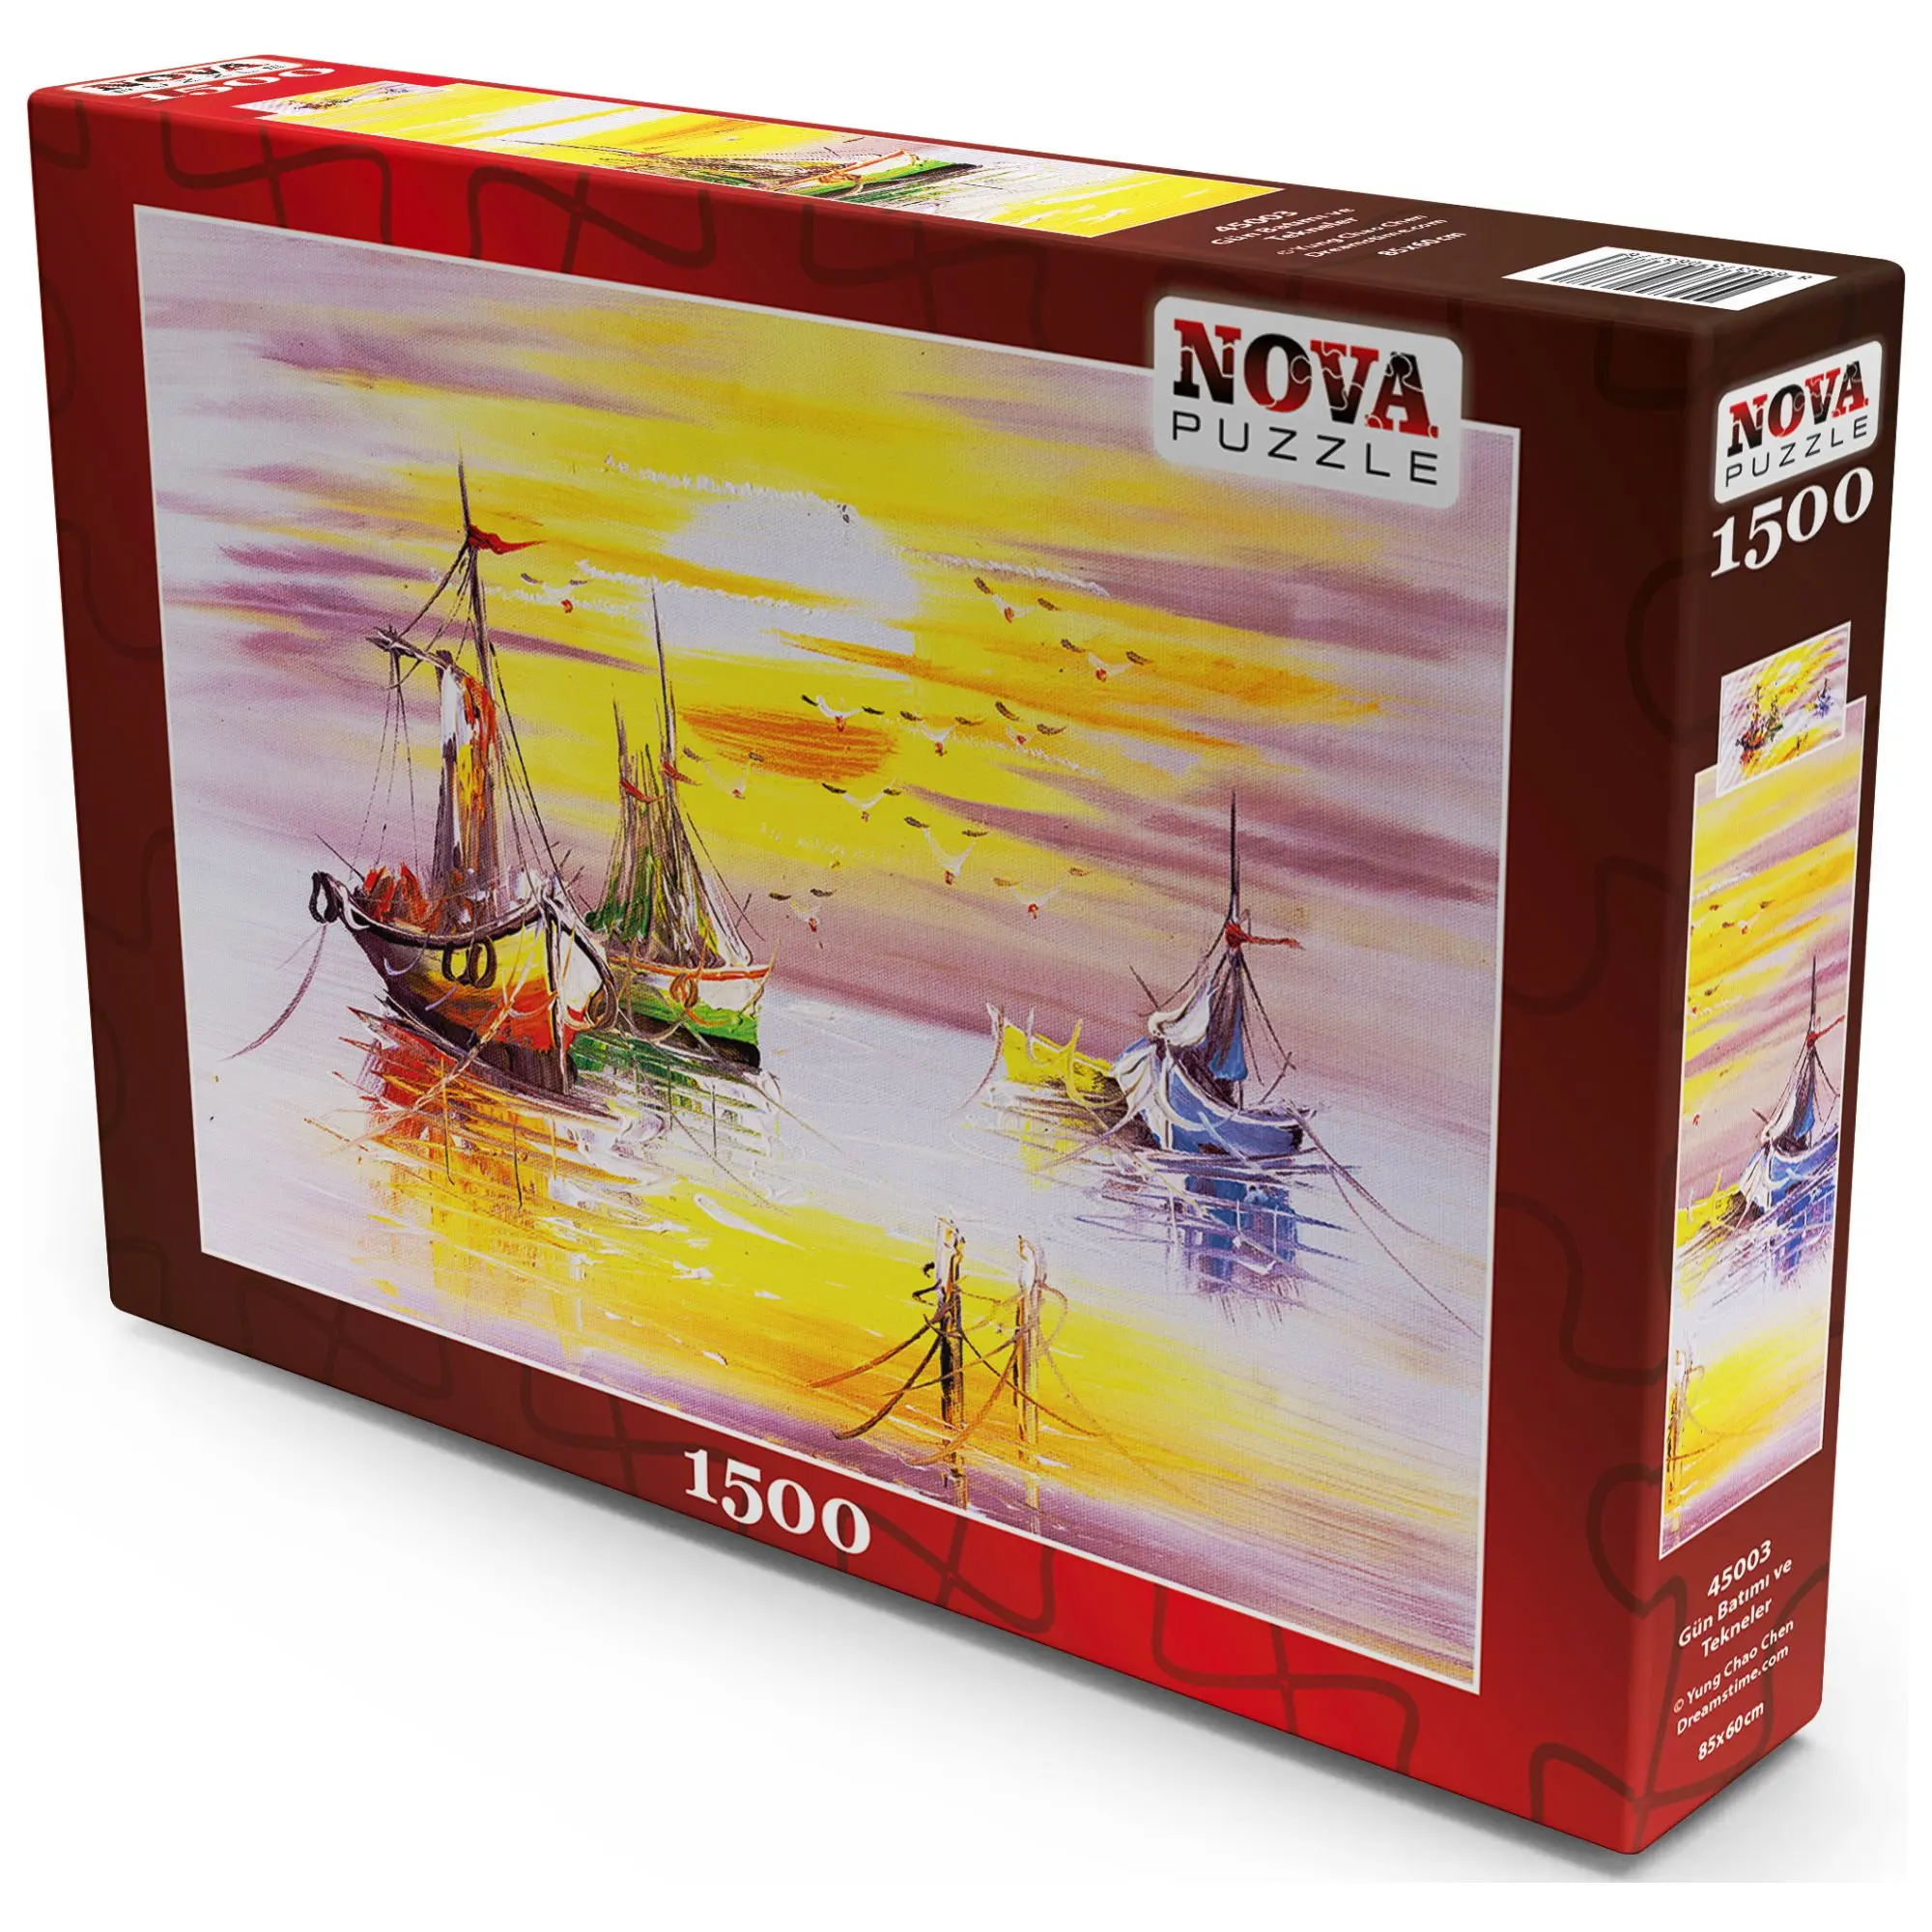 Nova пазл: закат и лодки из 1500 деталей-пазл Yung Chao Chen-стол для картины маслом, лодки, как солнце устанавливает картонный пазл от AliExpress RU&CIS NEW